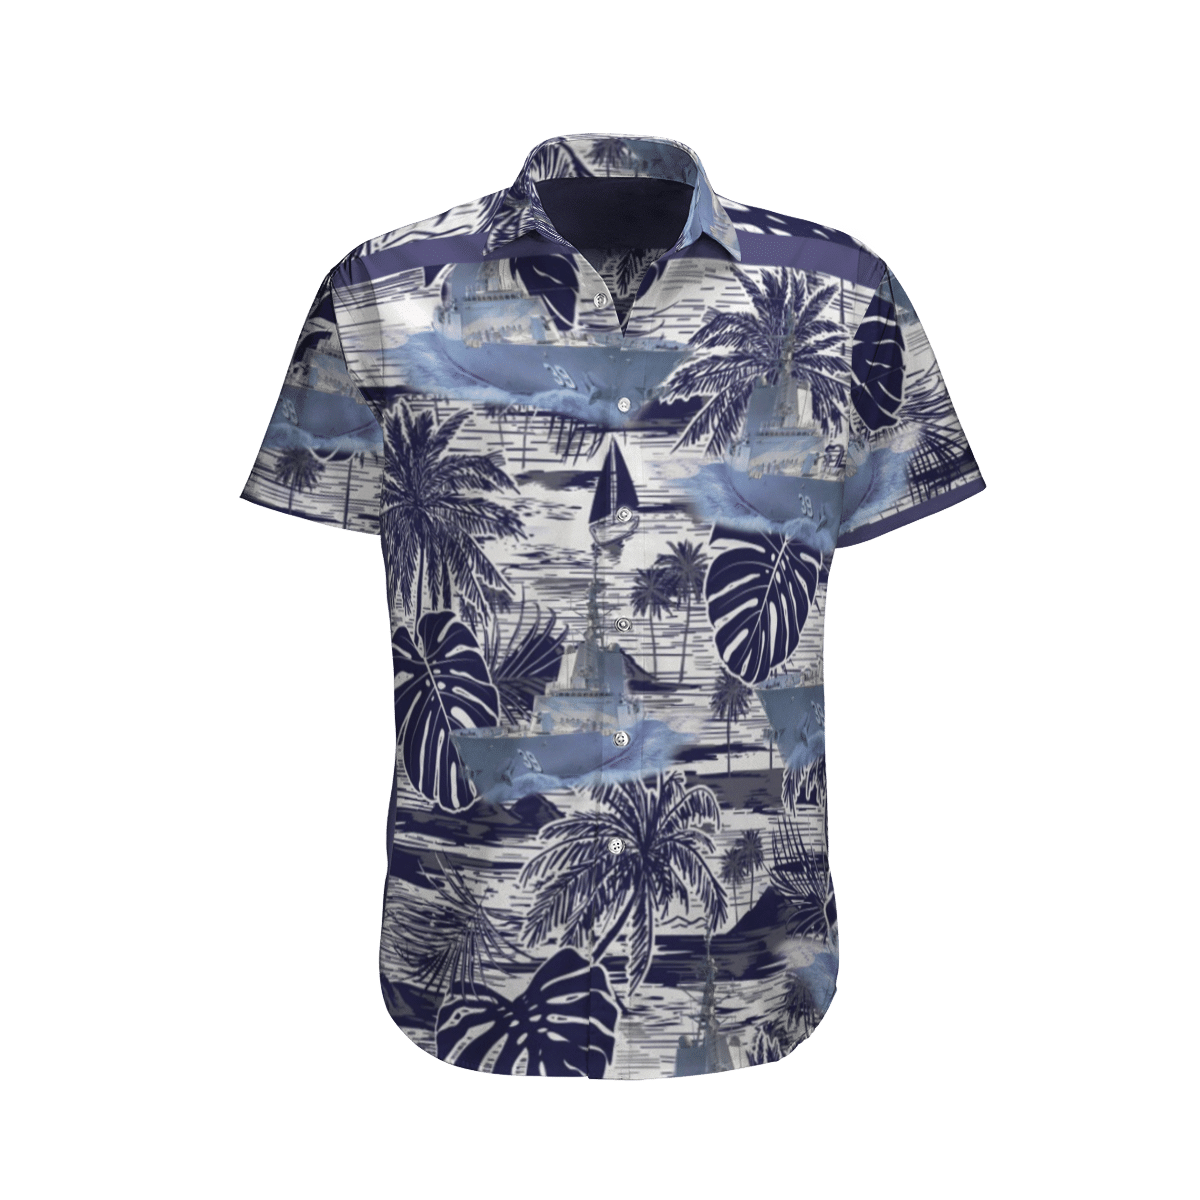 Enjoy your summer with top cool hawaiian shirt below 257